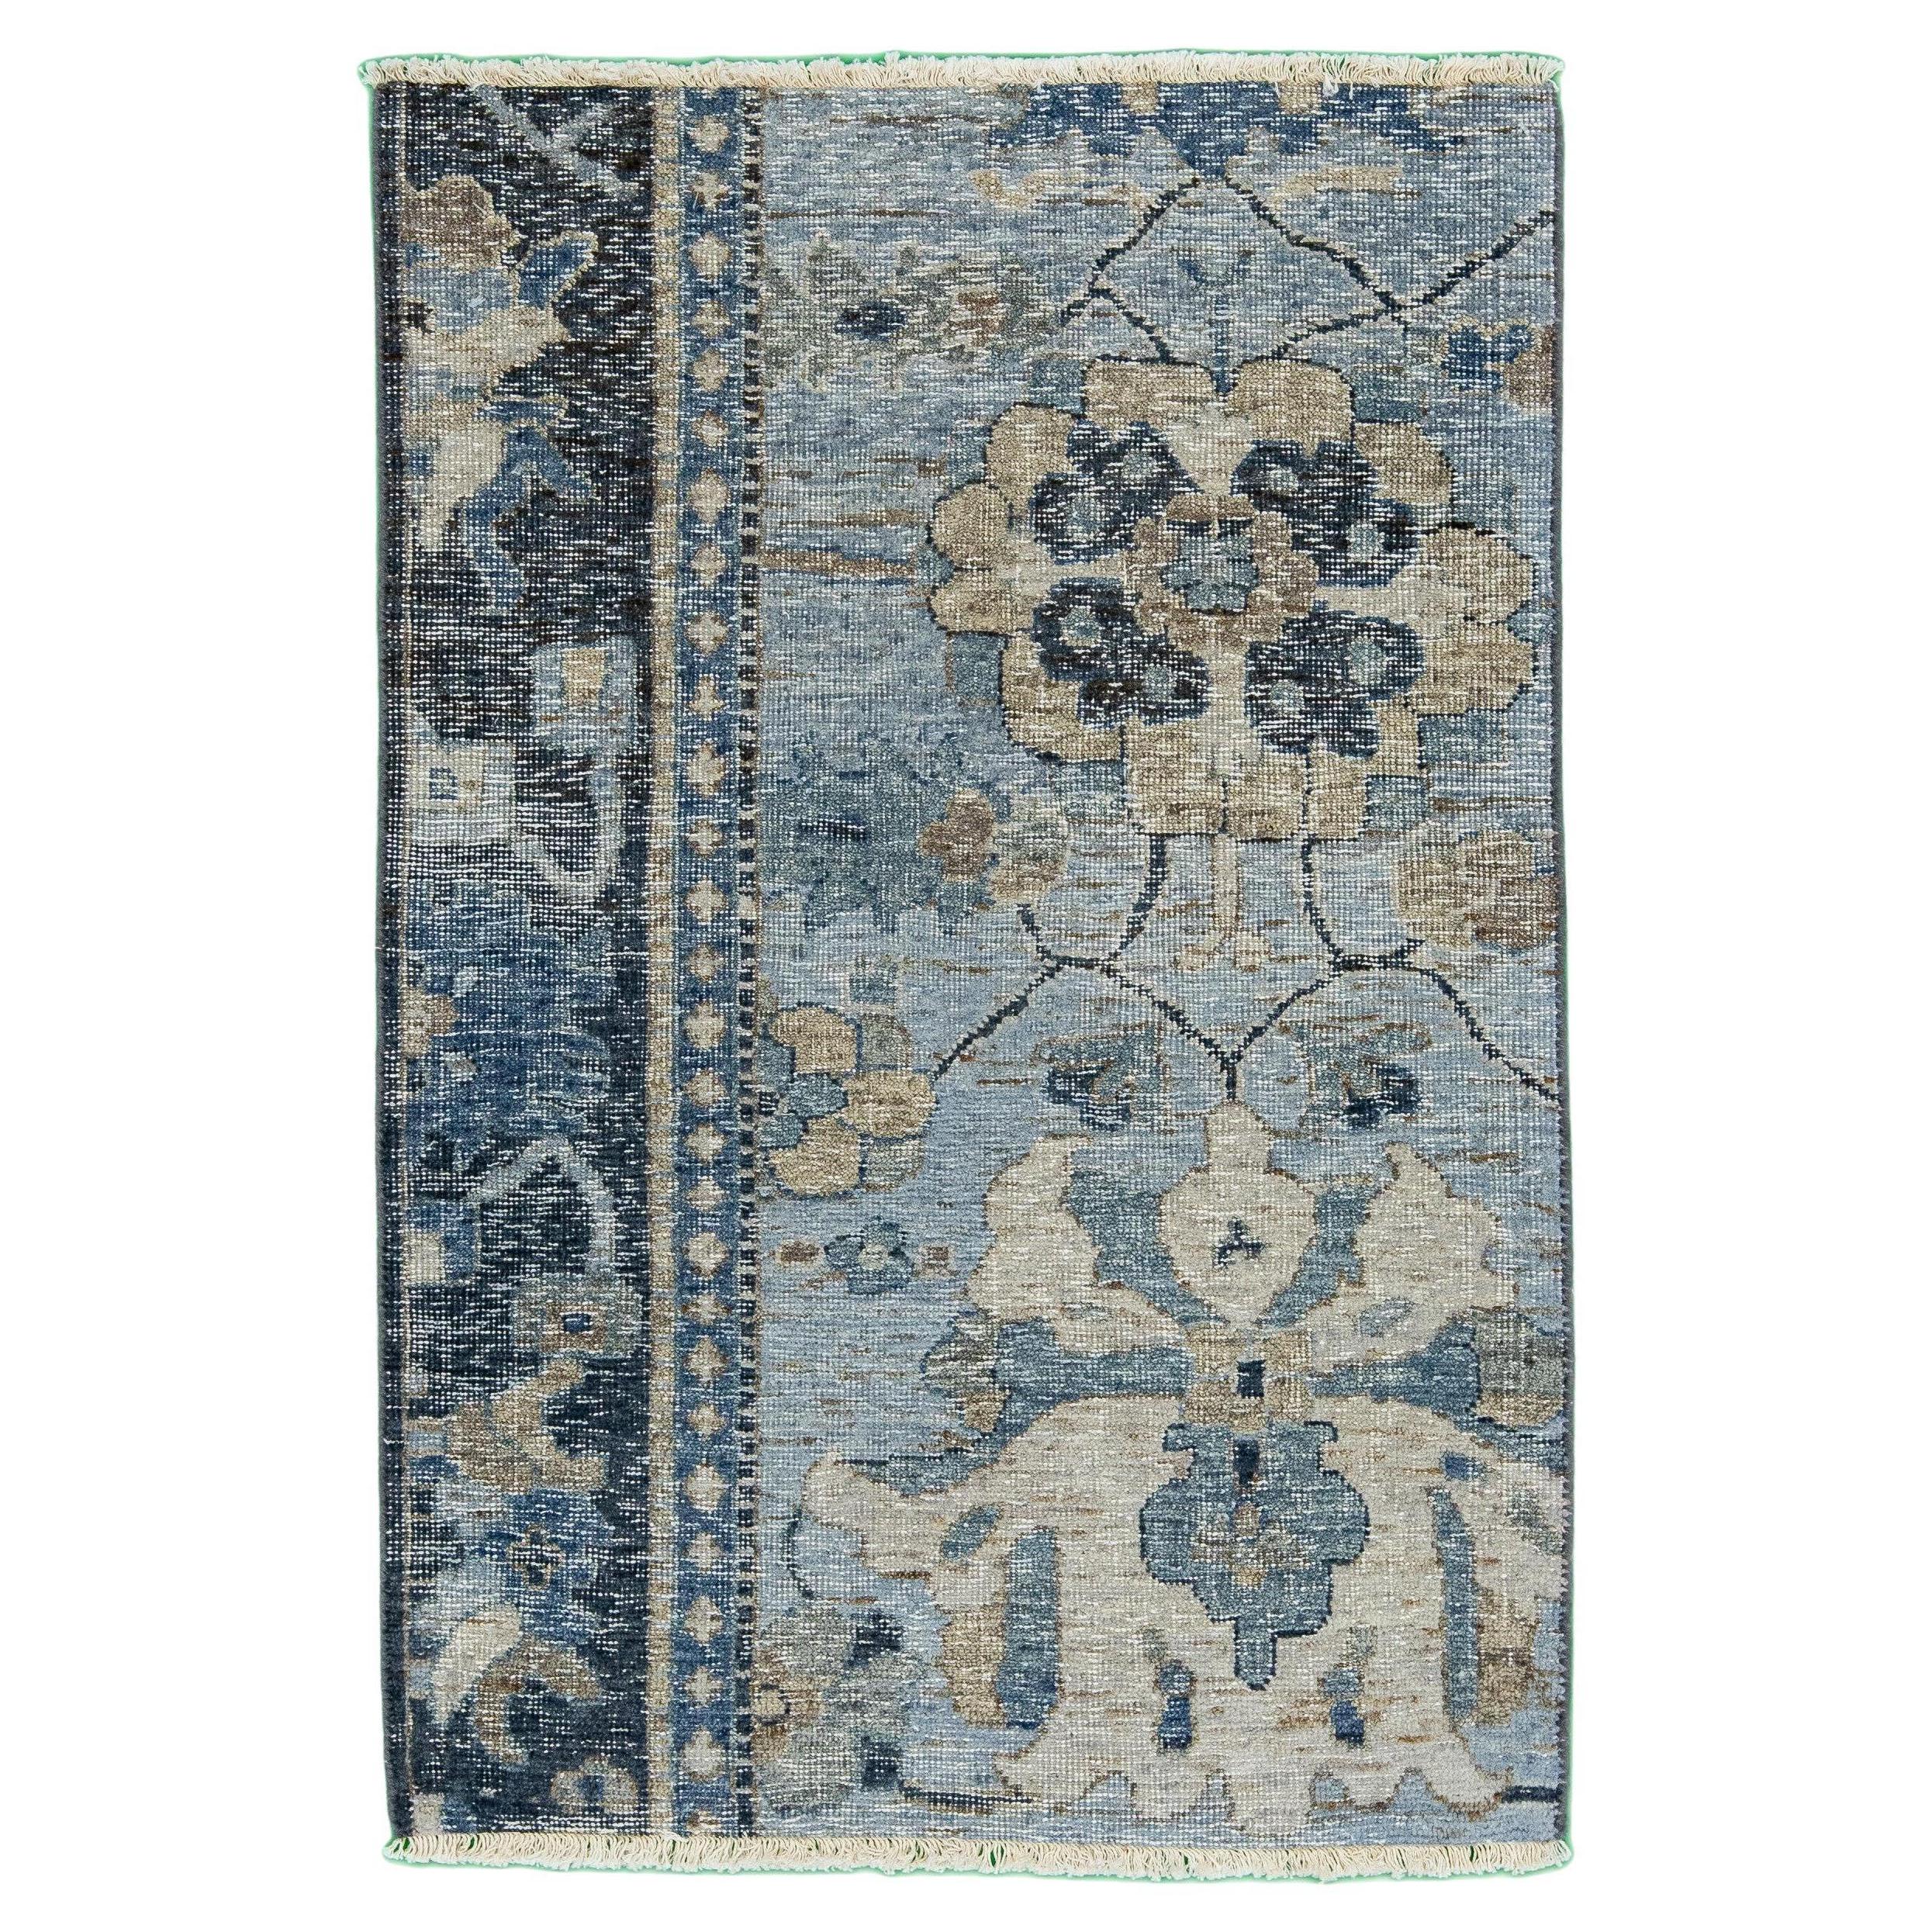 Apadana's Modern Tabriz Style Handmade Light Blue Custom Wool Rug